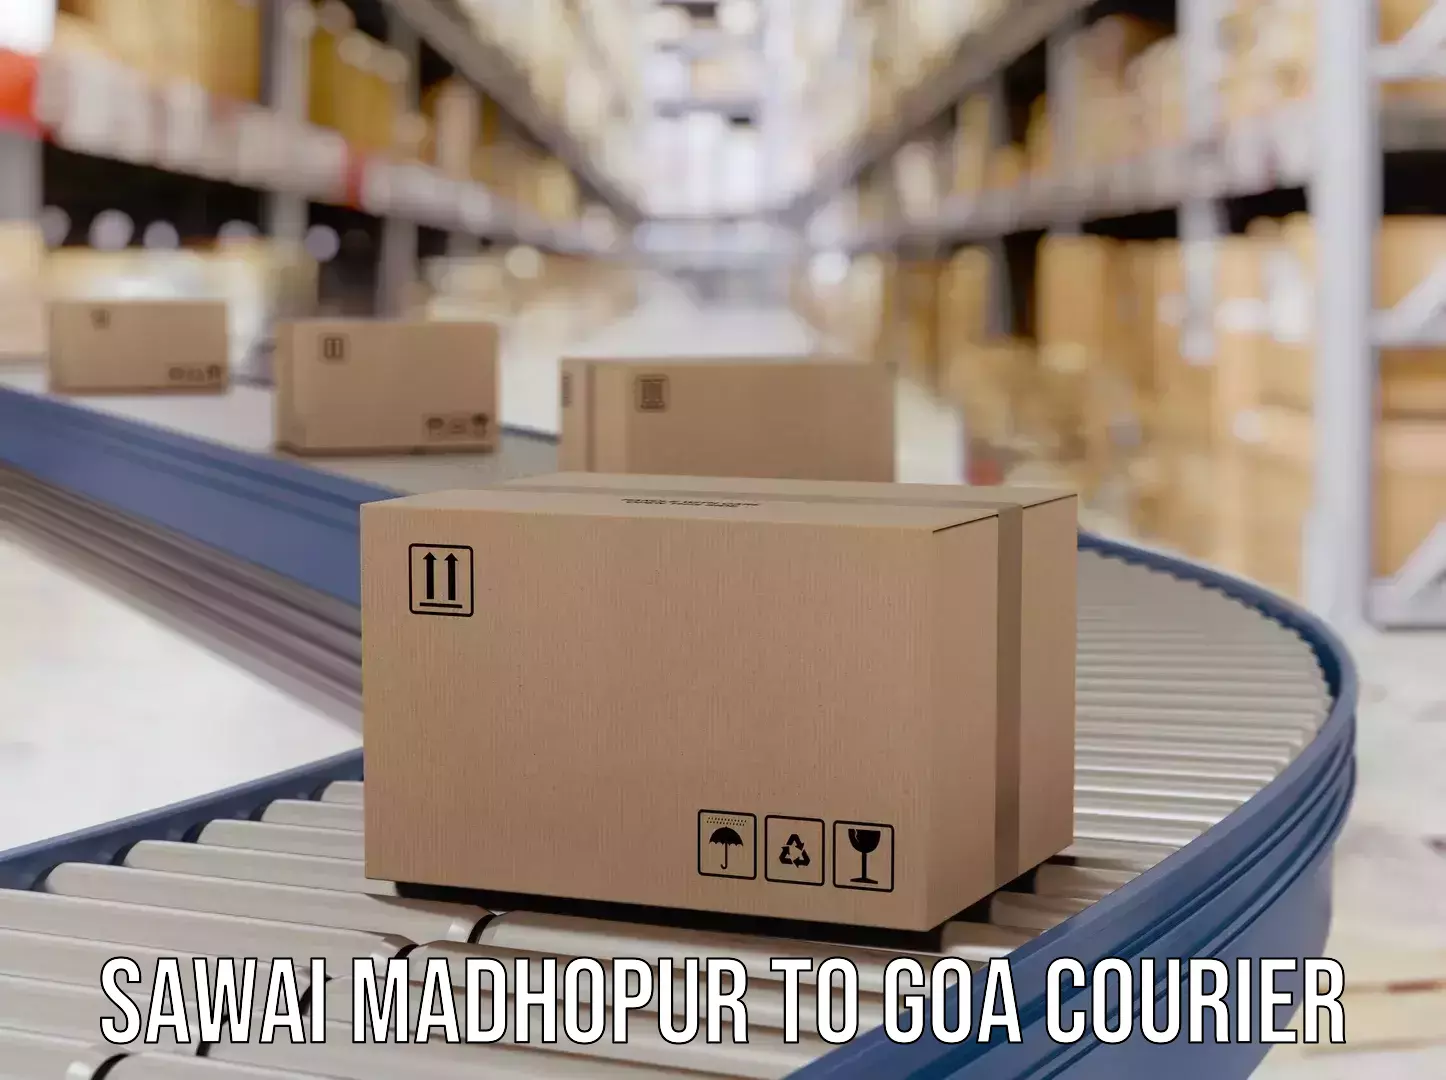 Courier service innovation Sawai Madhopur to Vasco da Gama